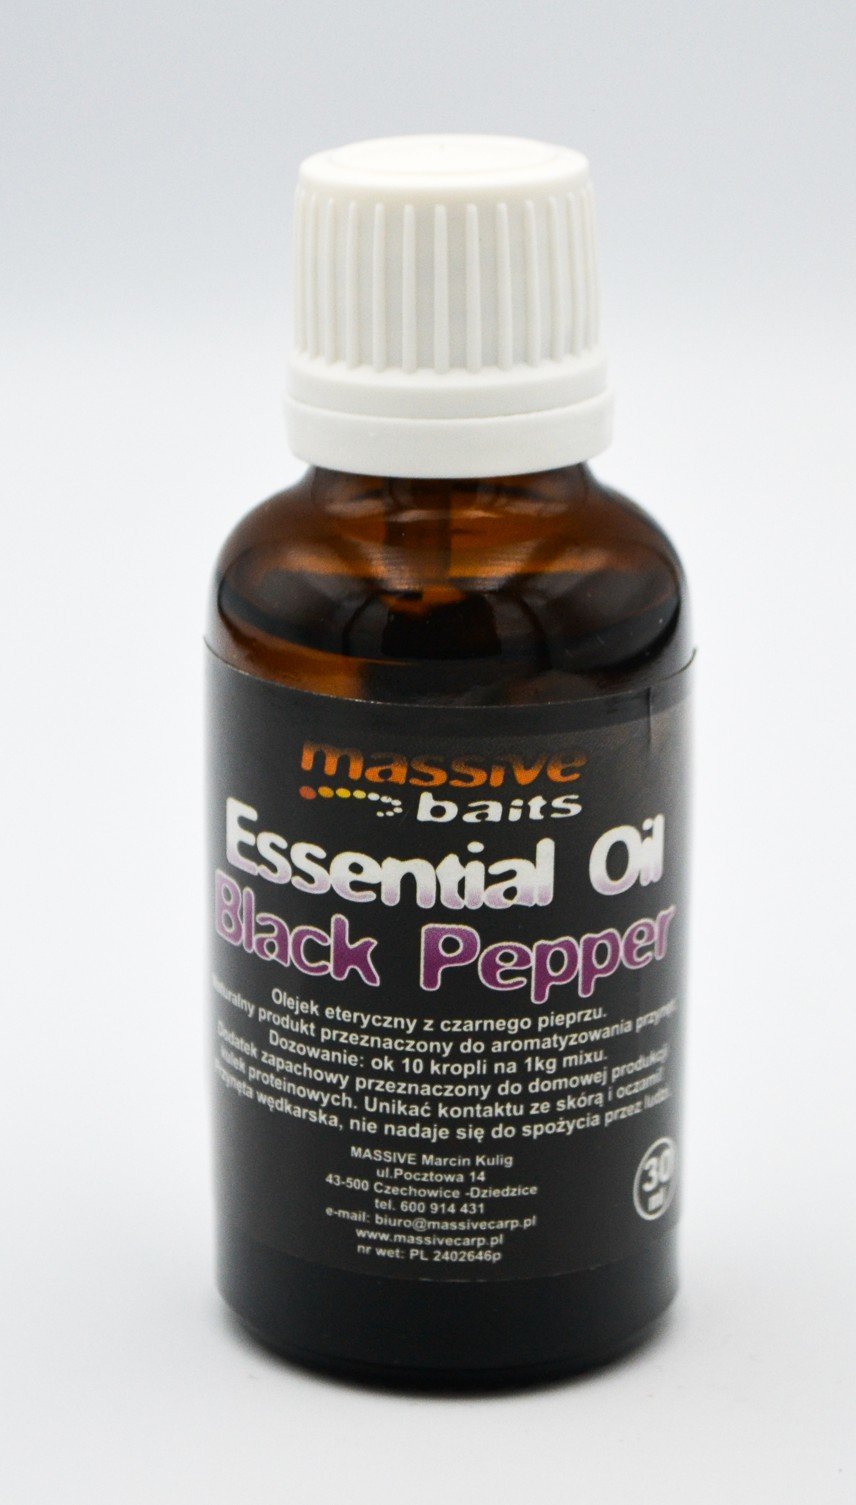 Massive Baits – Black Pepper – Essential Oil